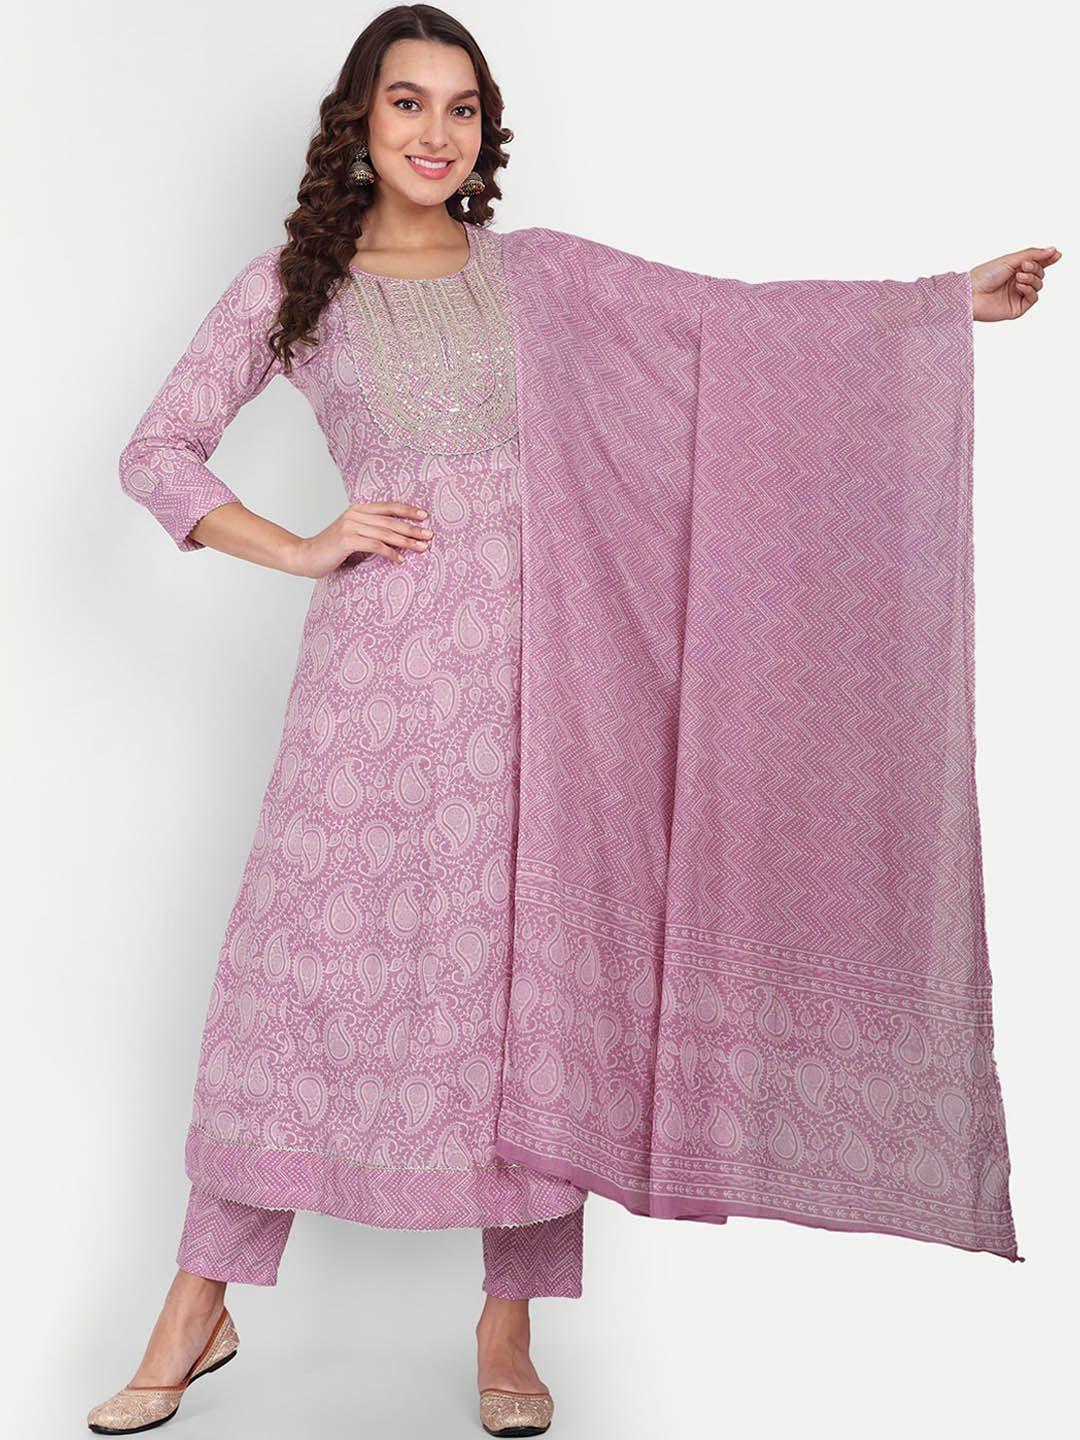 aarti fashion ethnic motifs embroidered pure cotton anarkali kurti with pyjamas & dupatta